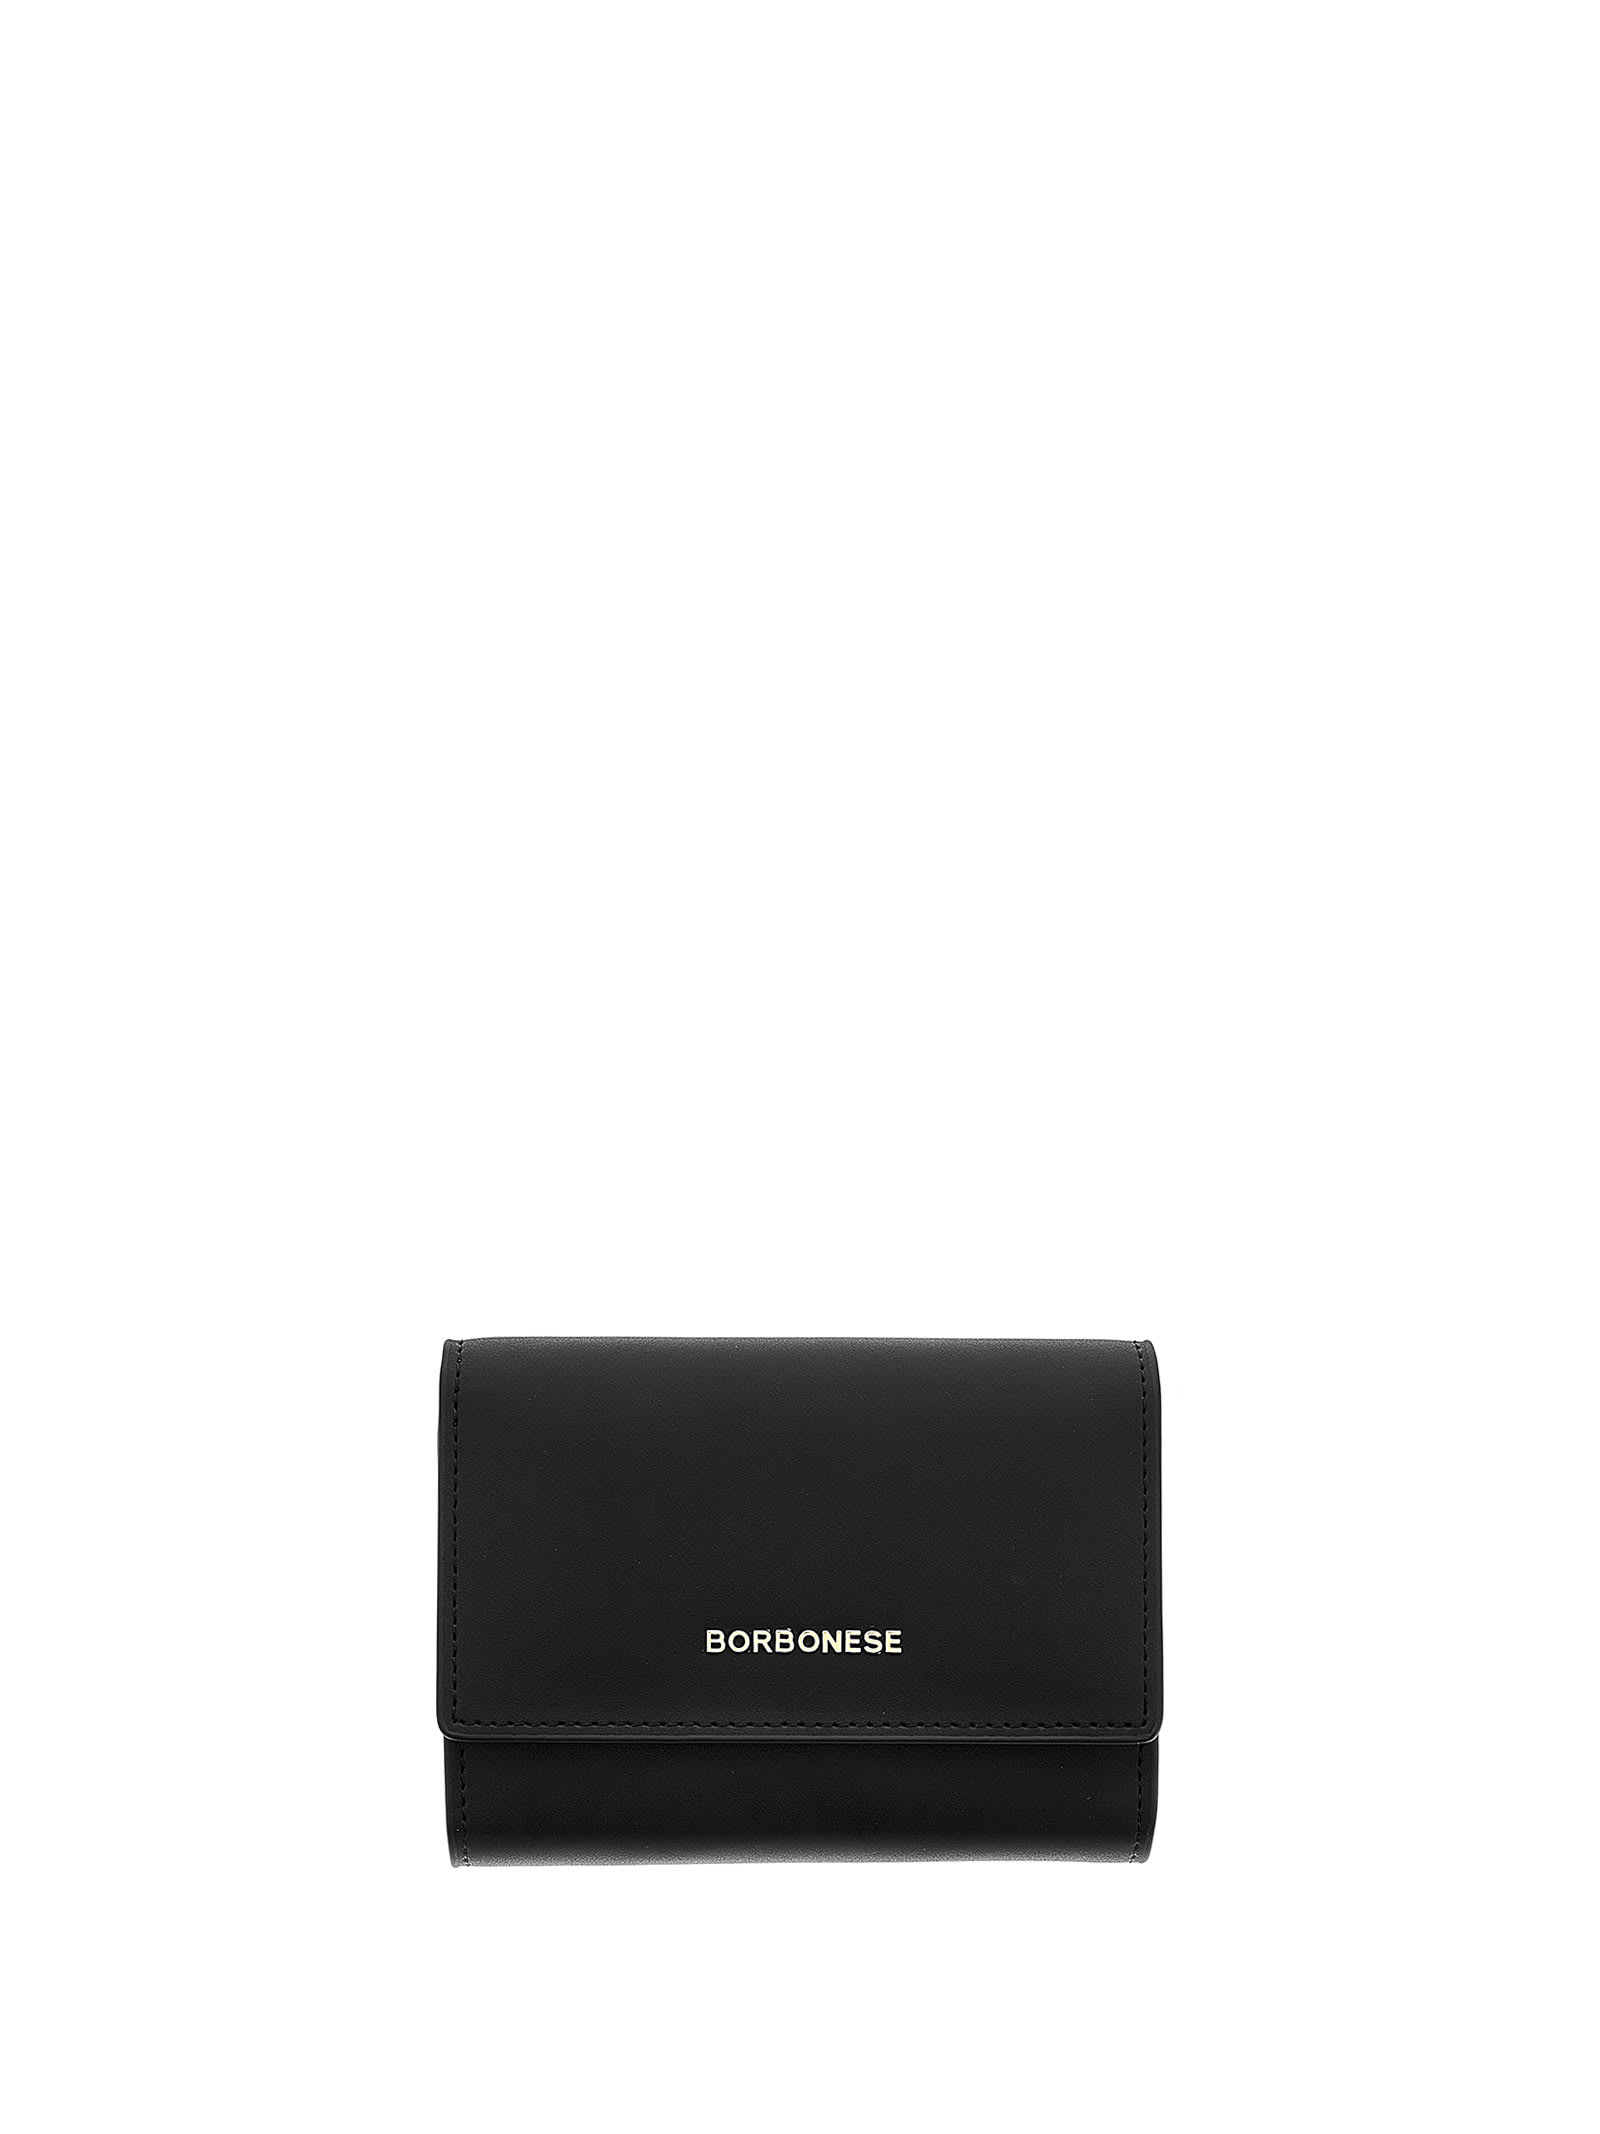 Borbonese Medium Black Leather Wallet